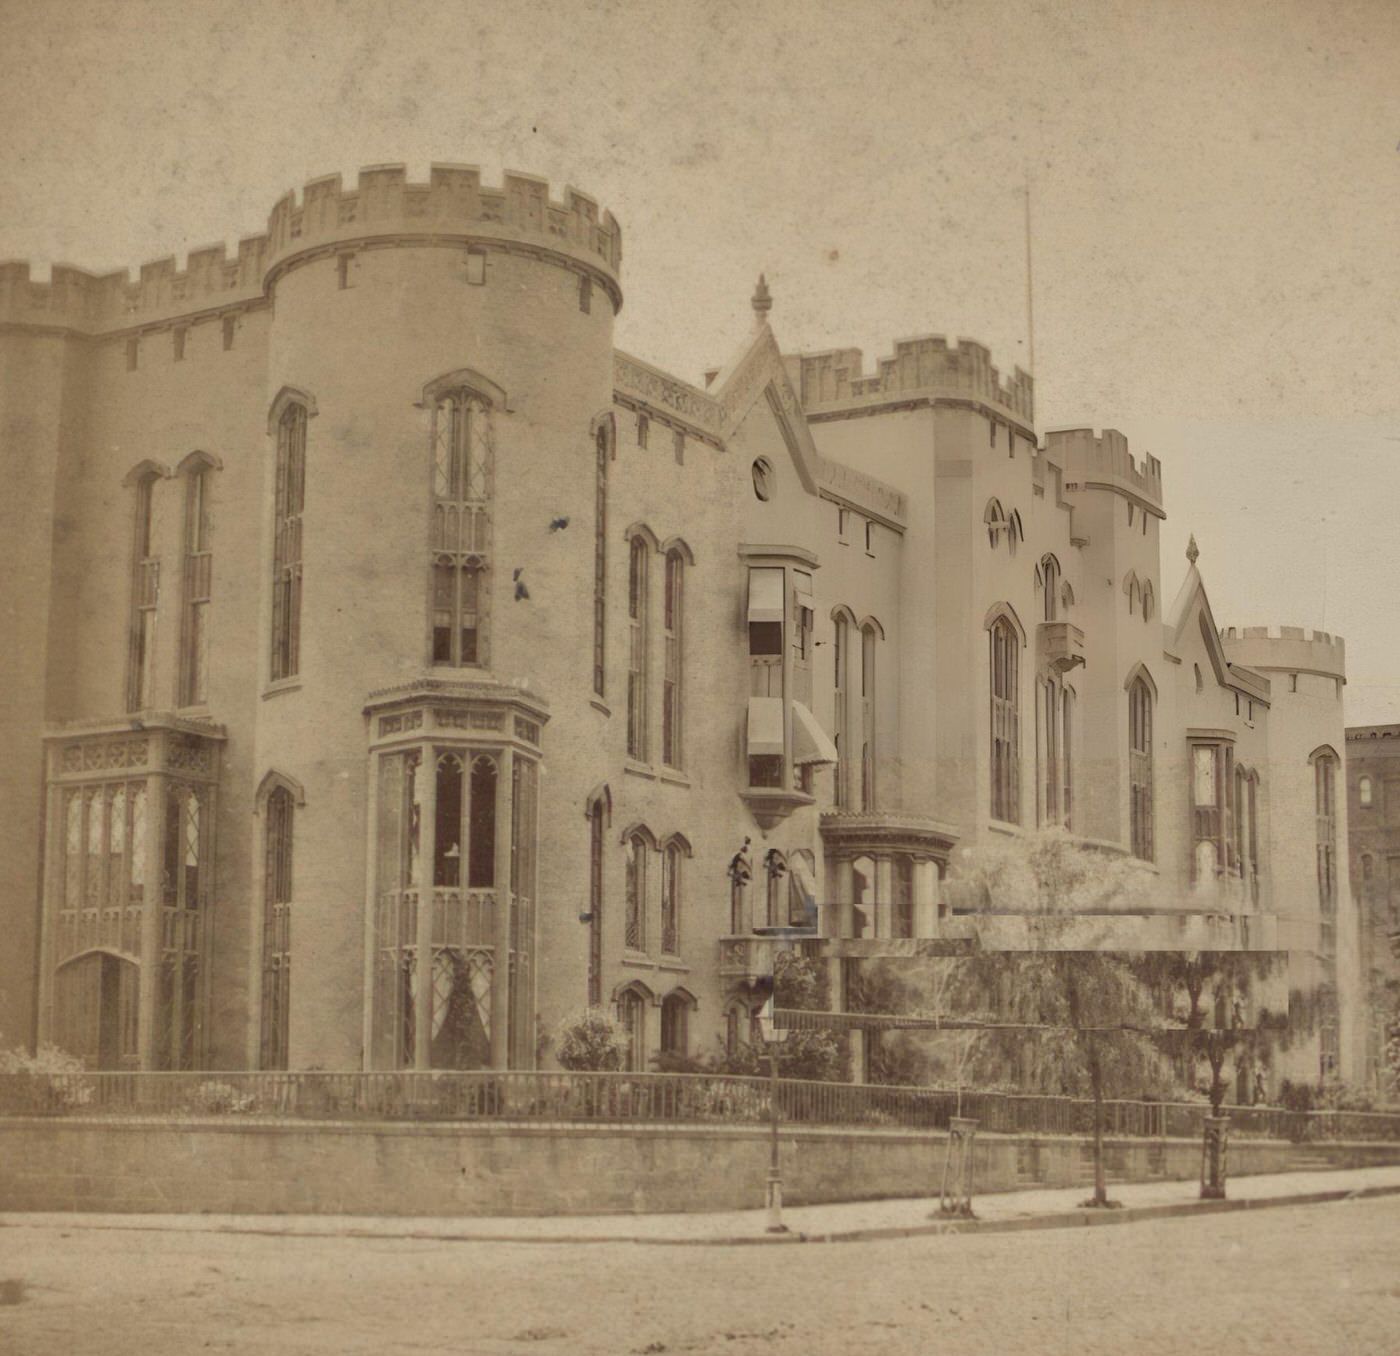 Rutger Institute On 5Th Avenue, Manhattan, 1850S.